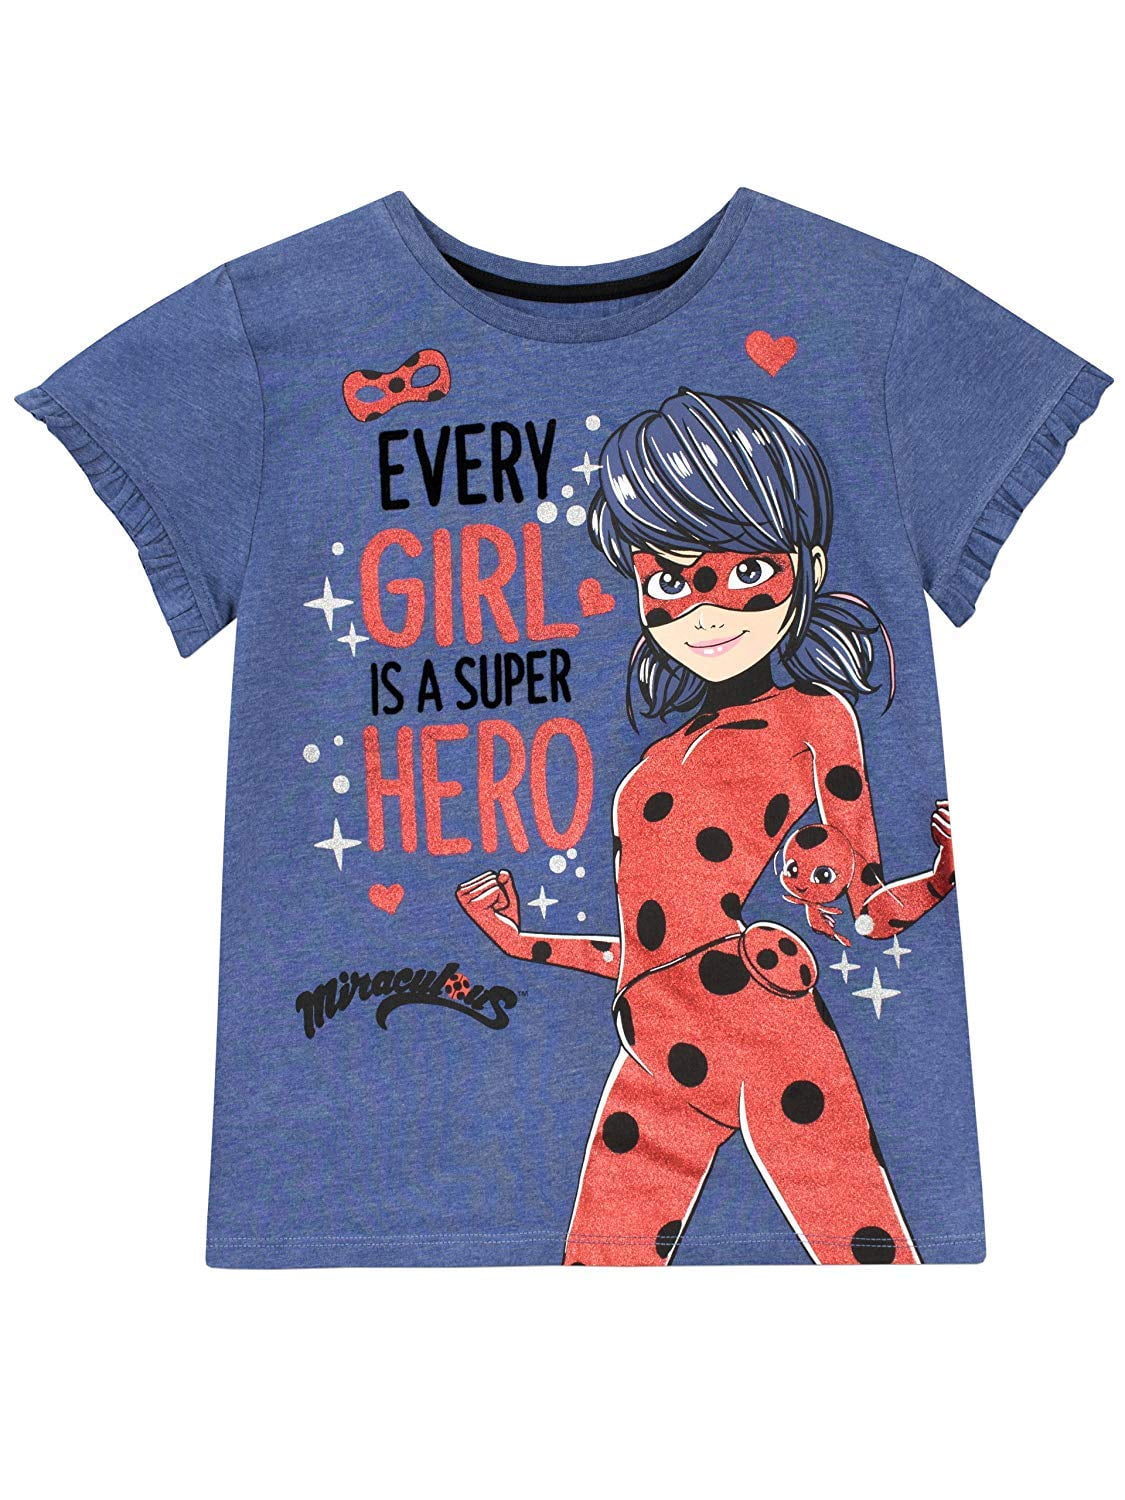 Miraculous Ladybug T-Shirt Size 5 Blue - Walmart.com